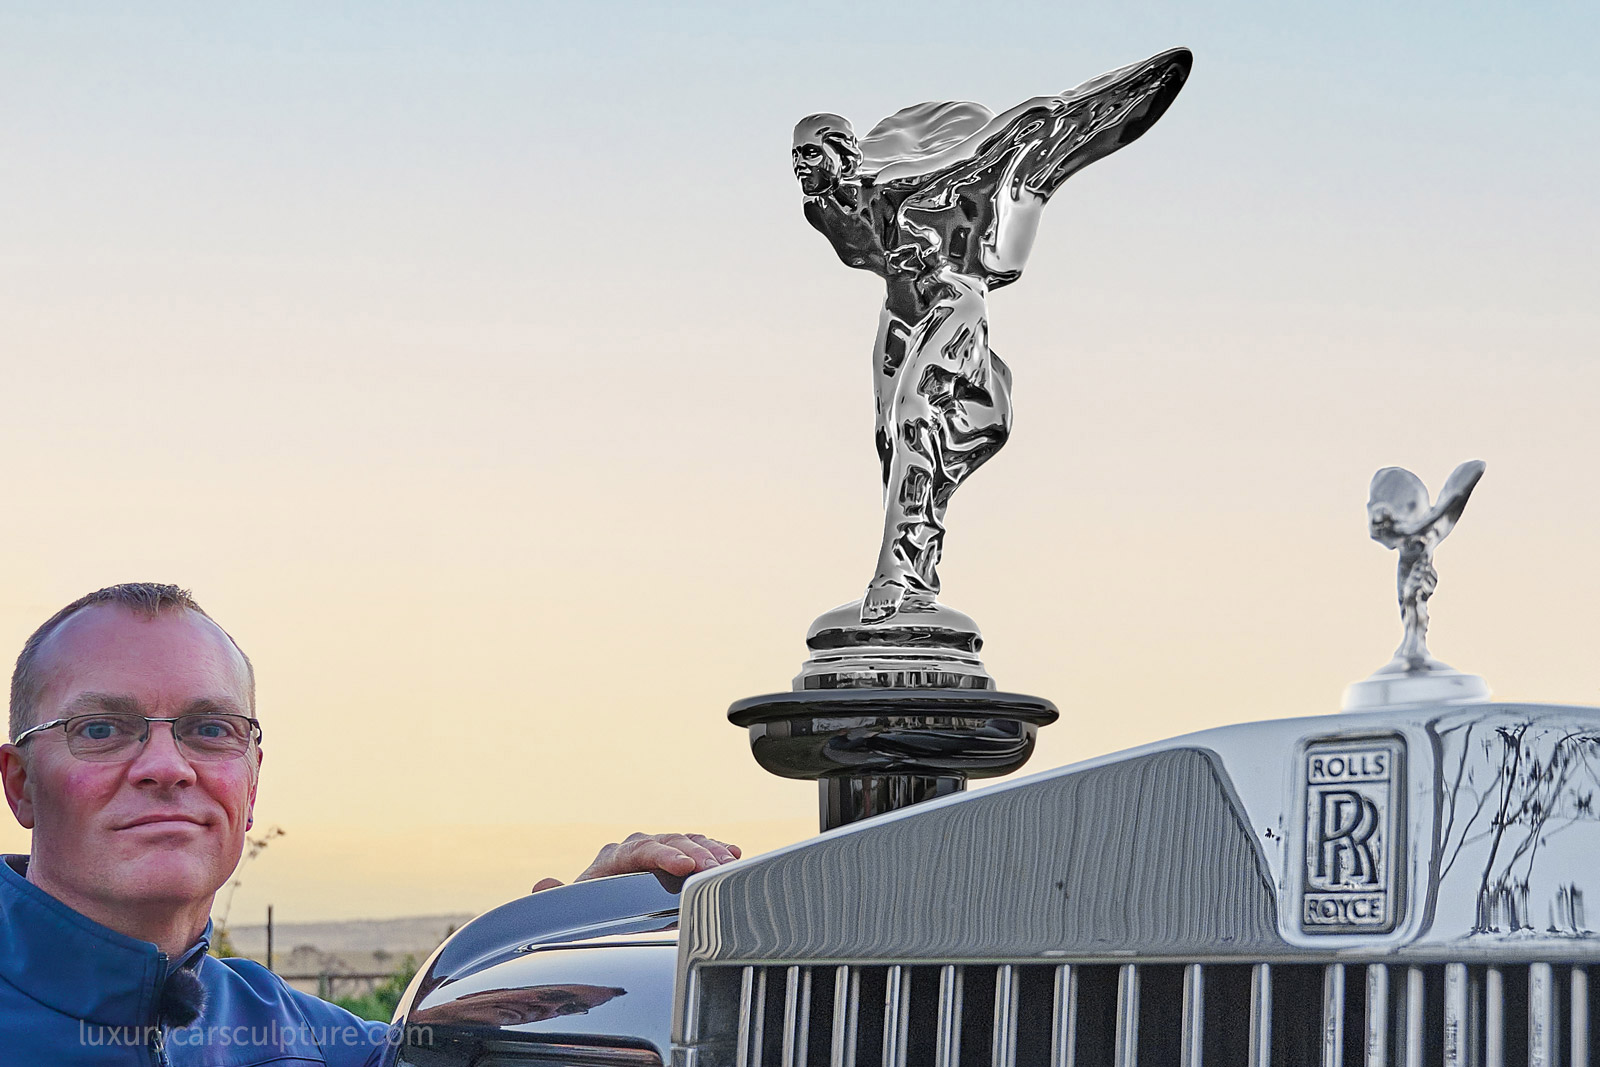 Get an Elegant Rolls Royce-Inspired Statue